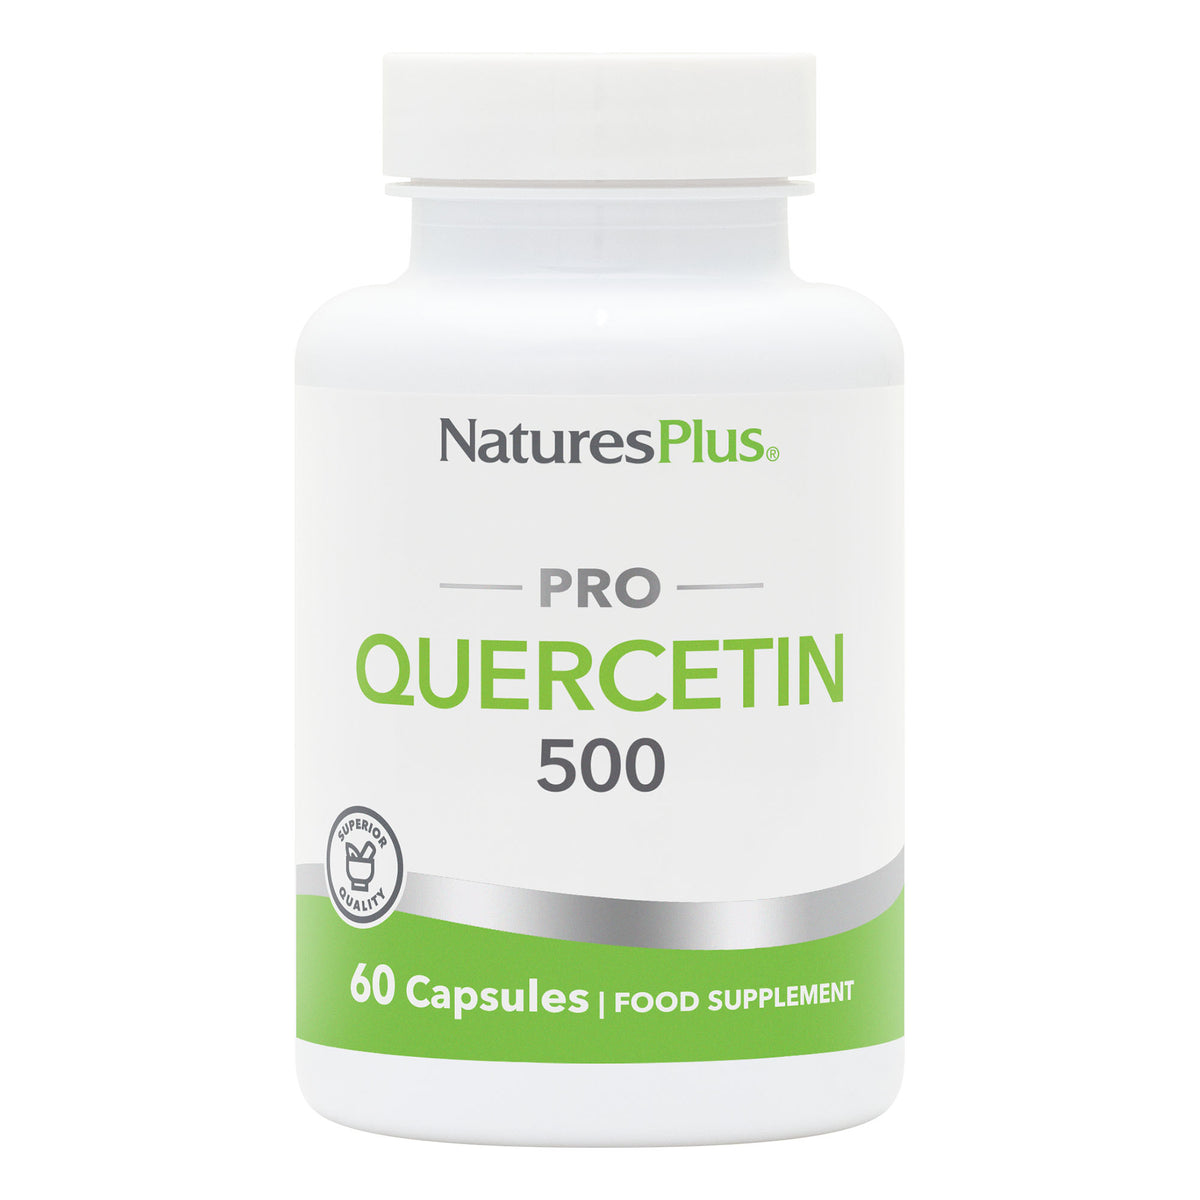 product image of NaturesPlus PRO Quercetin 500 MG containing NaturesPlus PRO Quercetin 500 MG